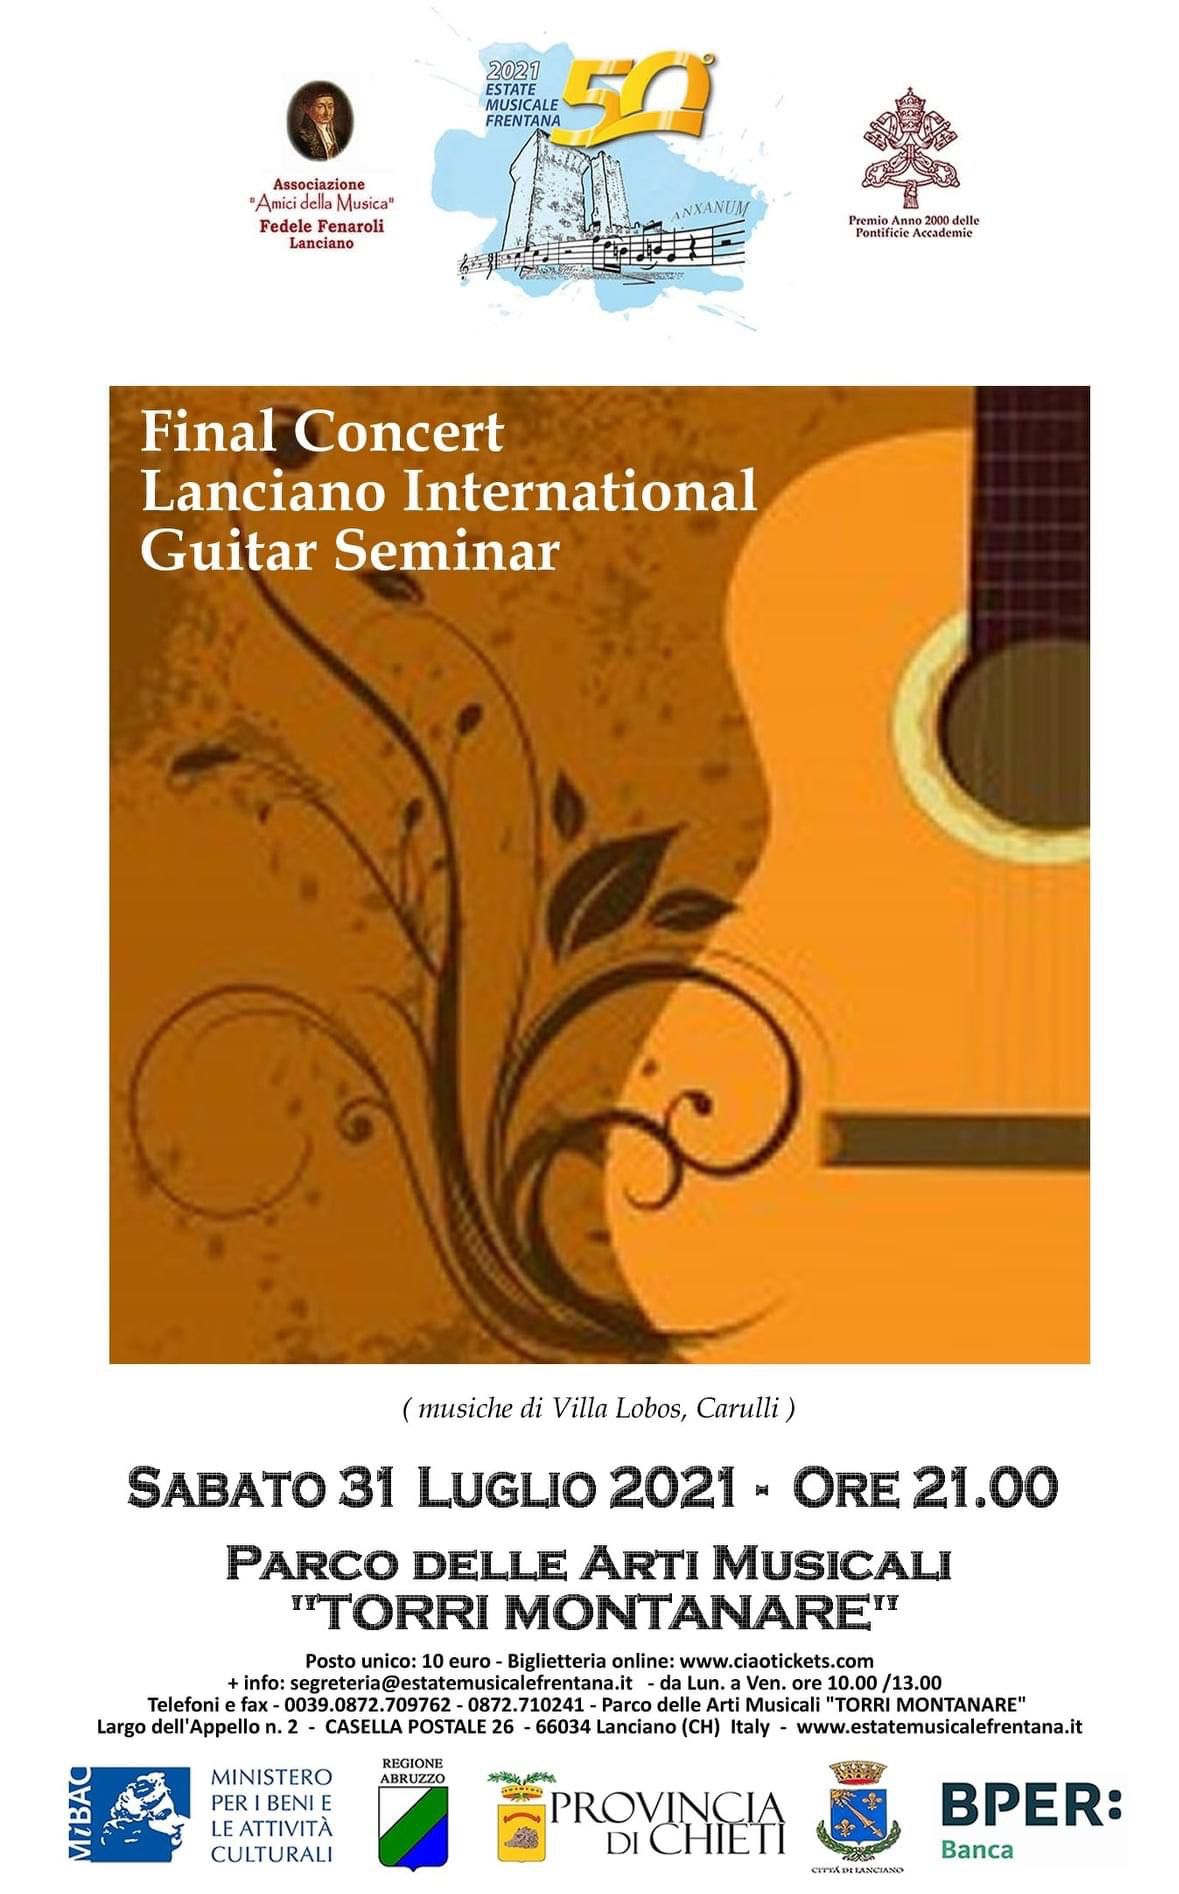 Estate musicale Frentana Lanciano, nel weekend gli eventi concertistici Casa Dante e International Guitar Seminar